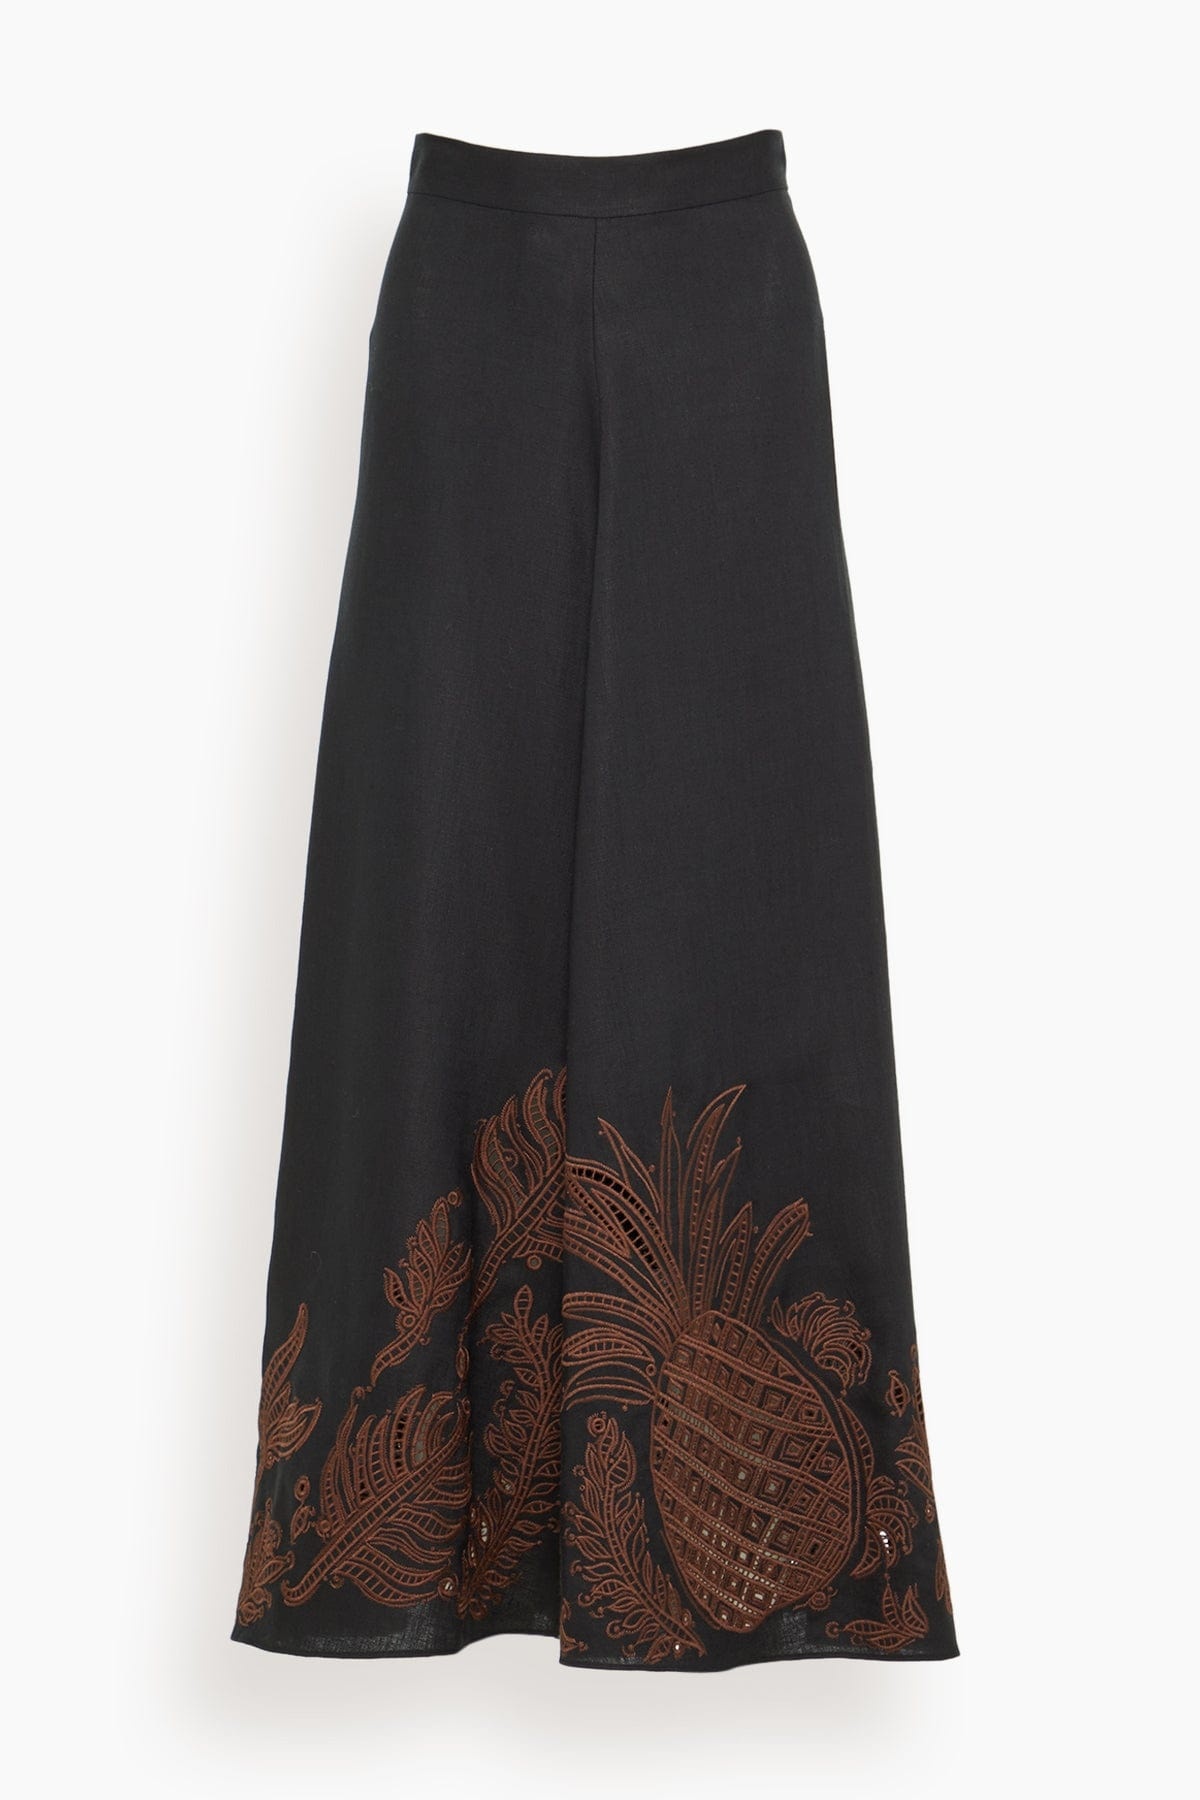 Exquisite Luxury Skirt in Pure Black - 1